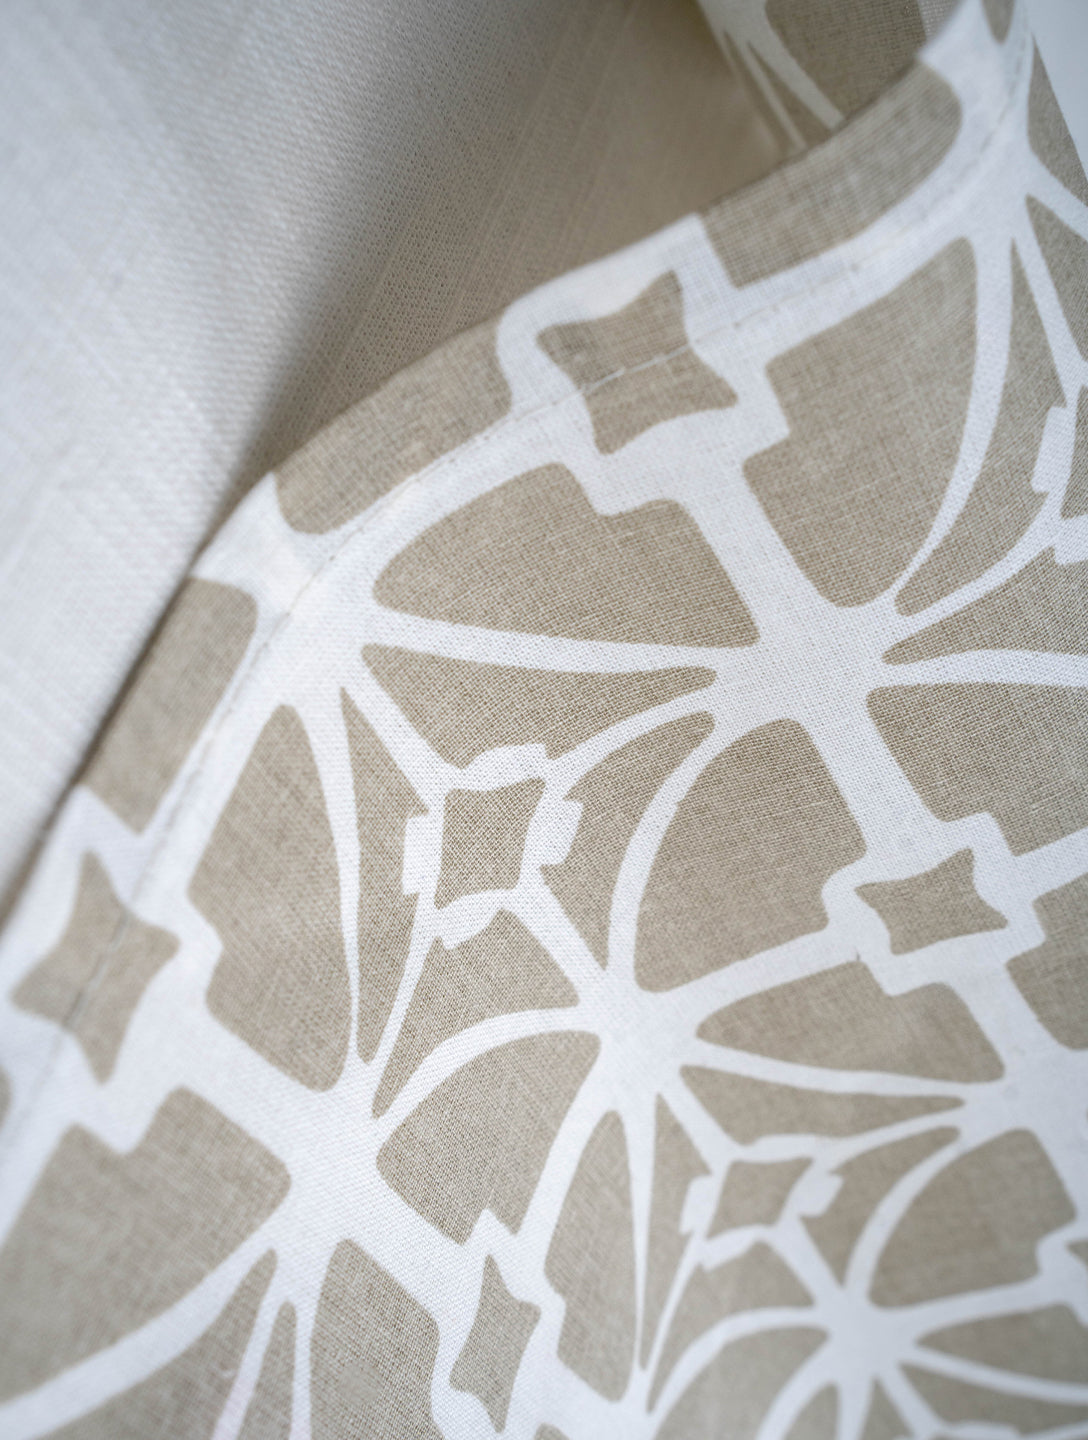 Beige Cotton Geometric Printed 12x12 Inch Napkin Set of 6